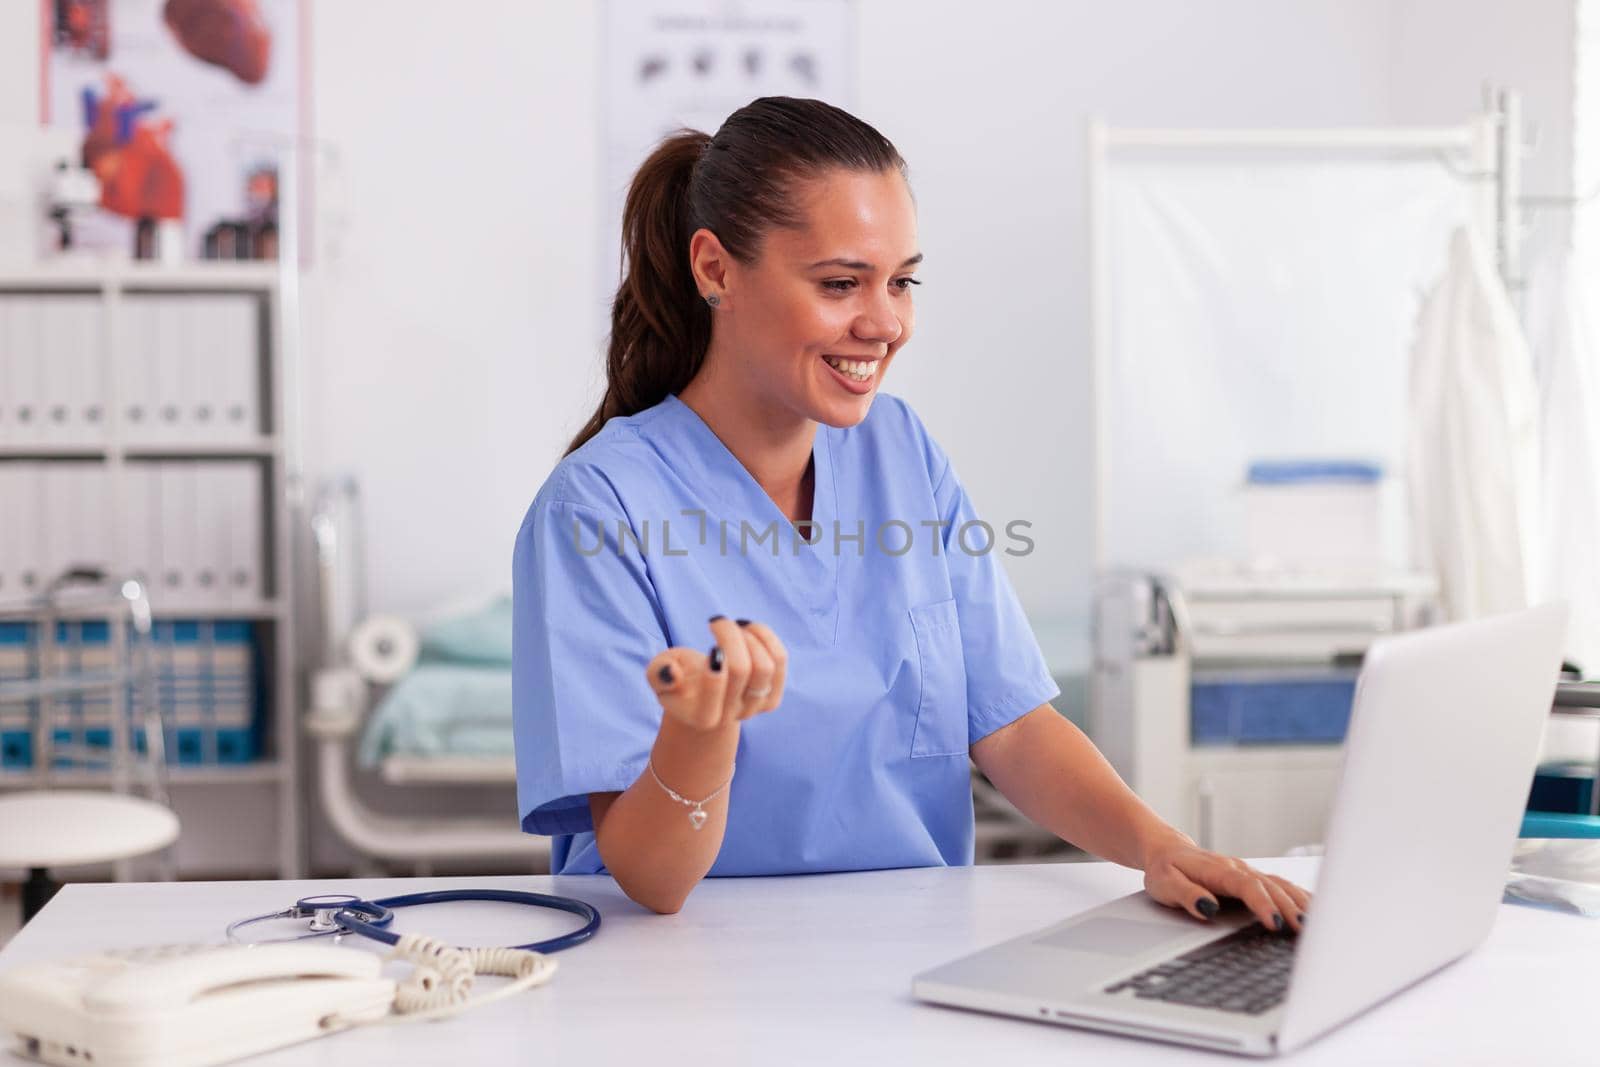 Medical nurse smiling by DCStudio